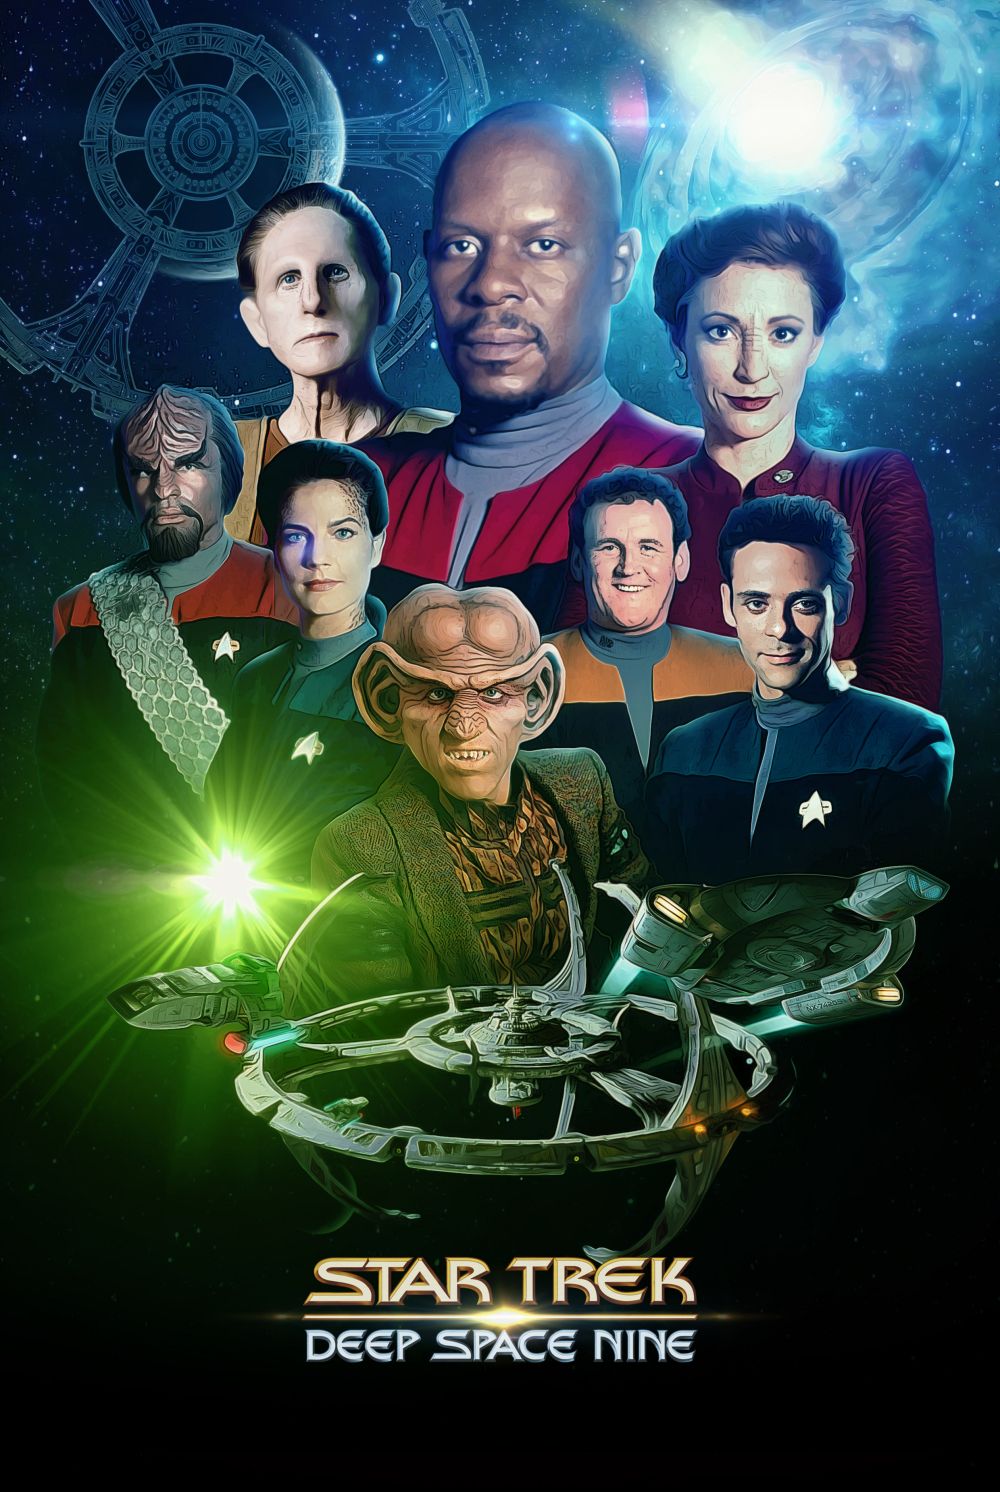 Star Trek: DS9 (Deep Space Nine)